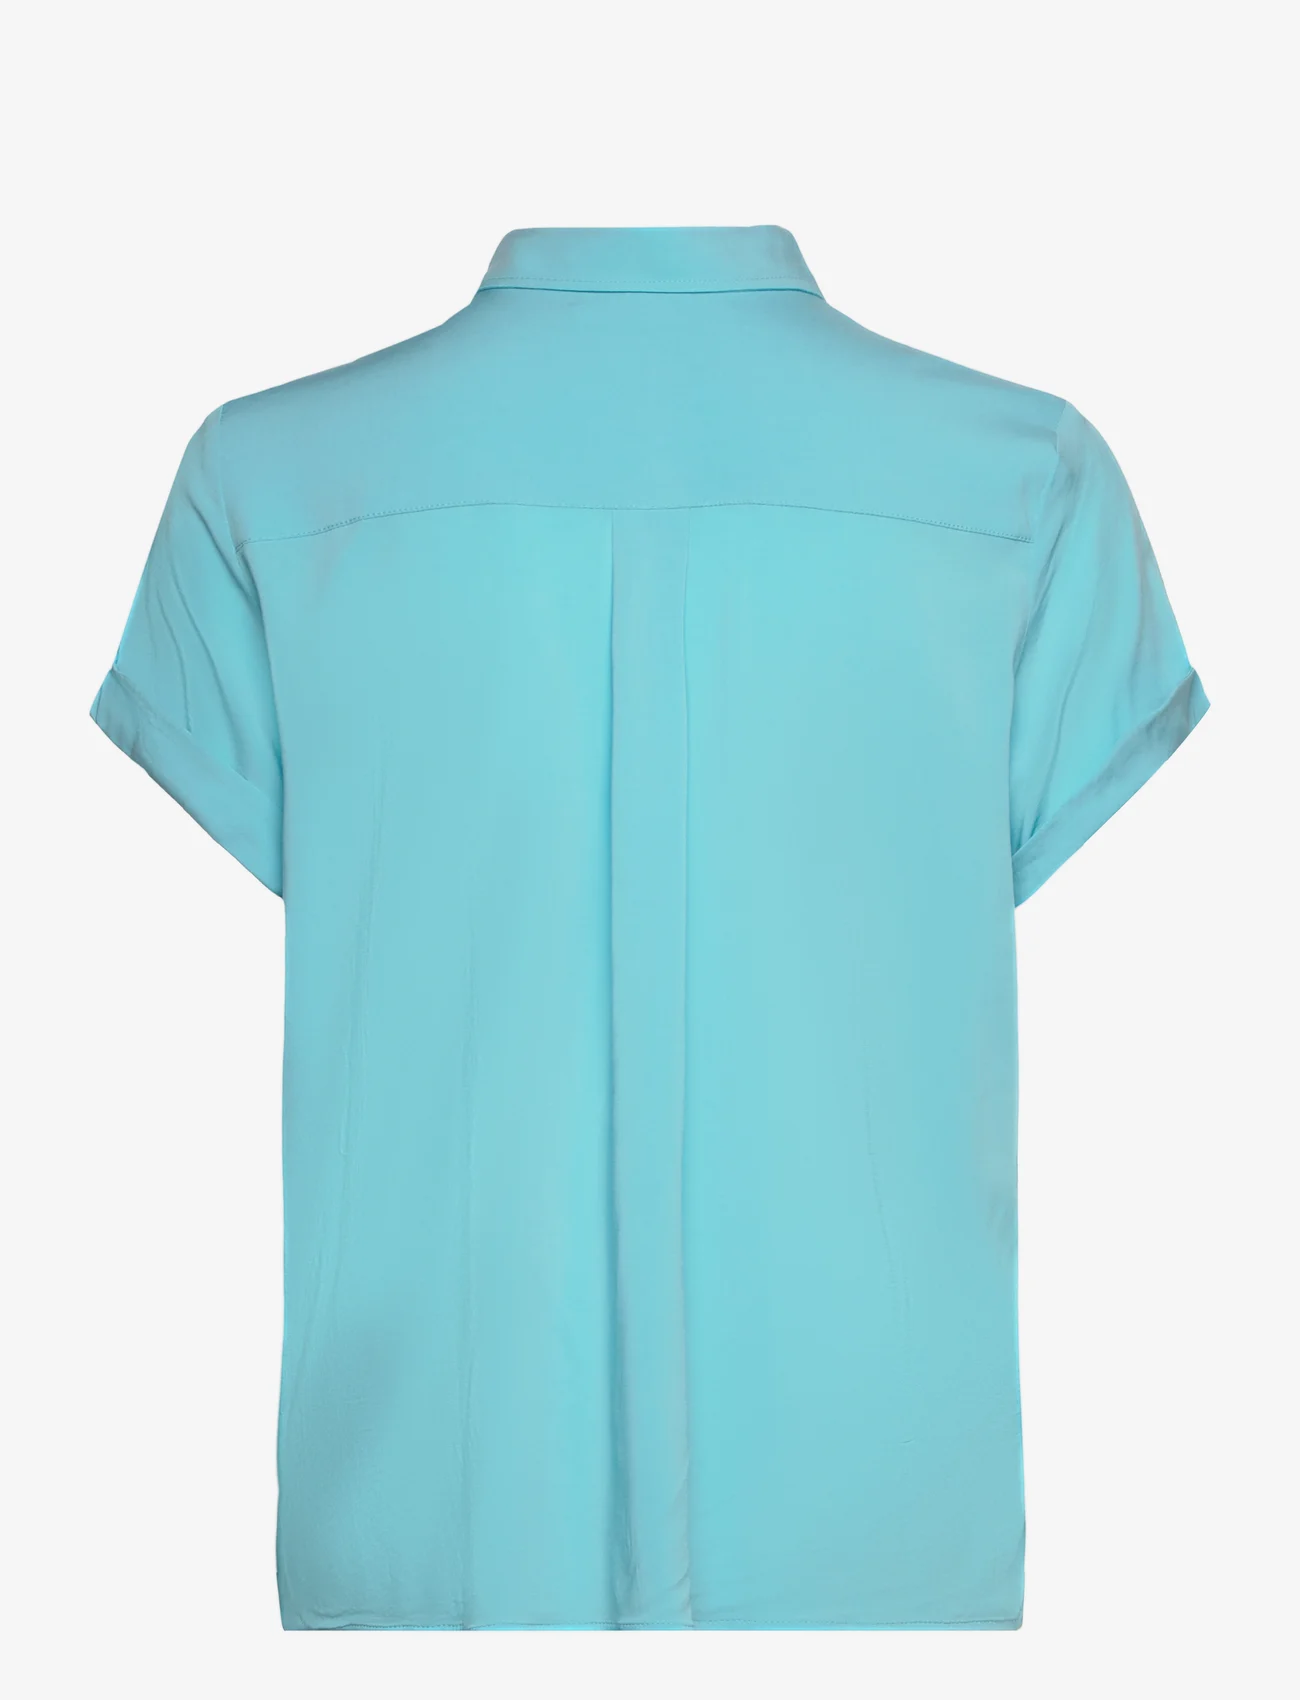 Samsøe Samsøe - Majan ss shirt 9942 - kortermede skjorter - blue topaz - 1